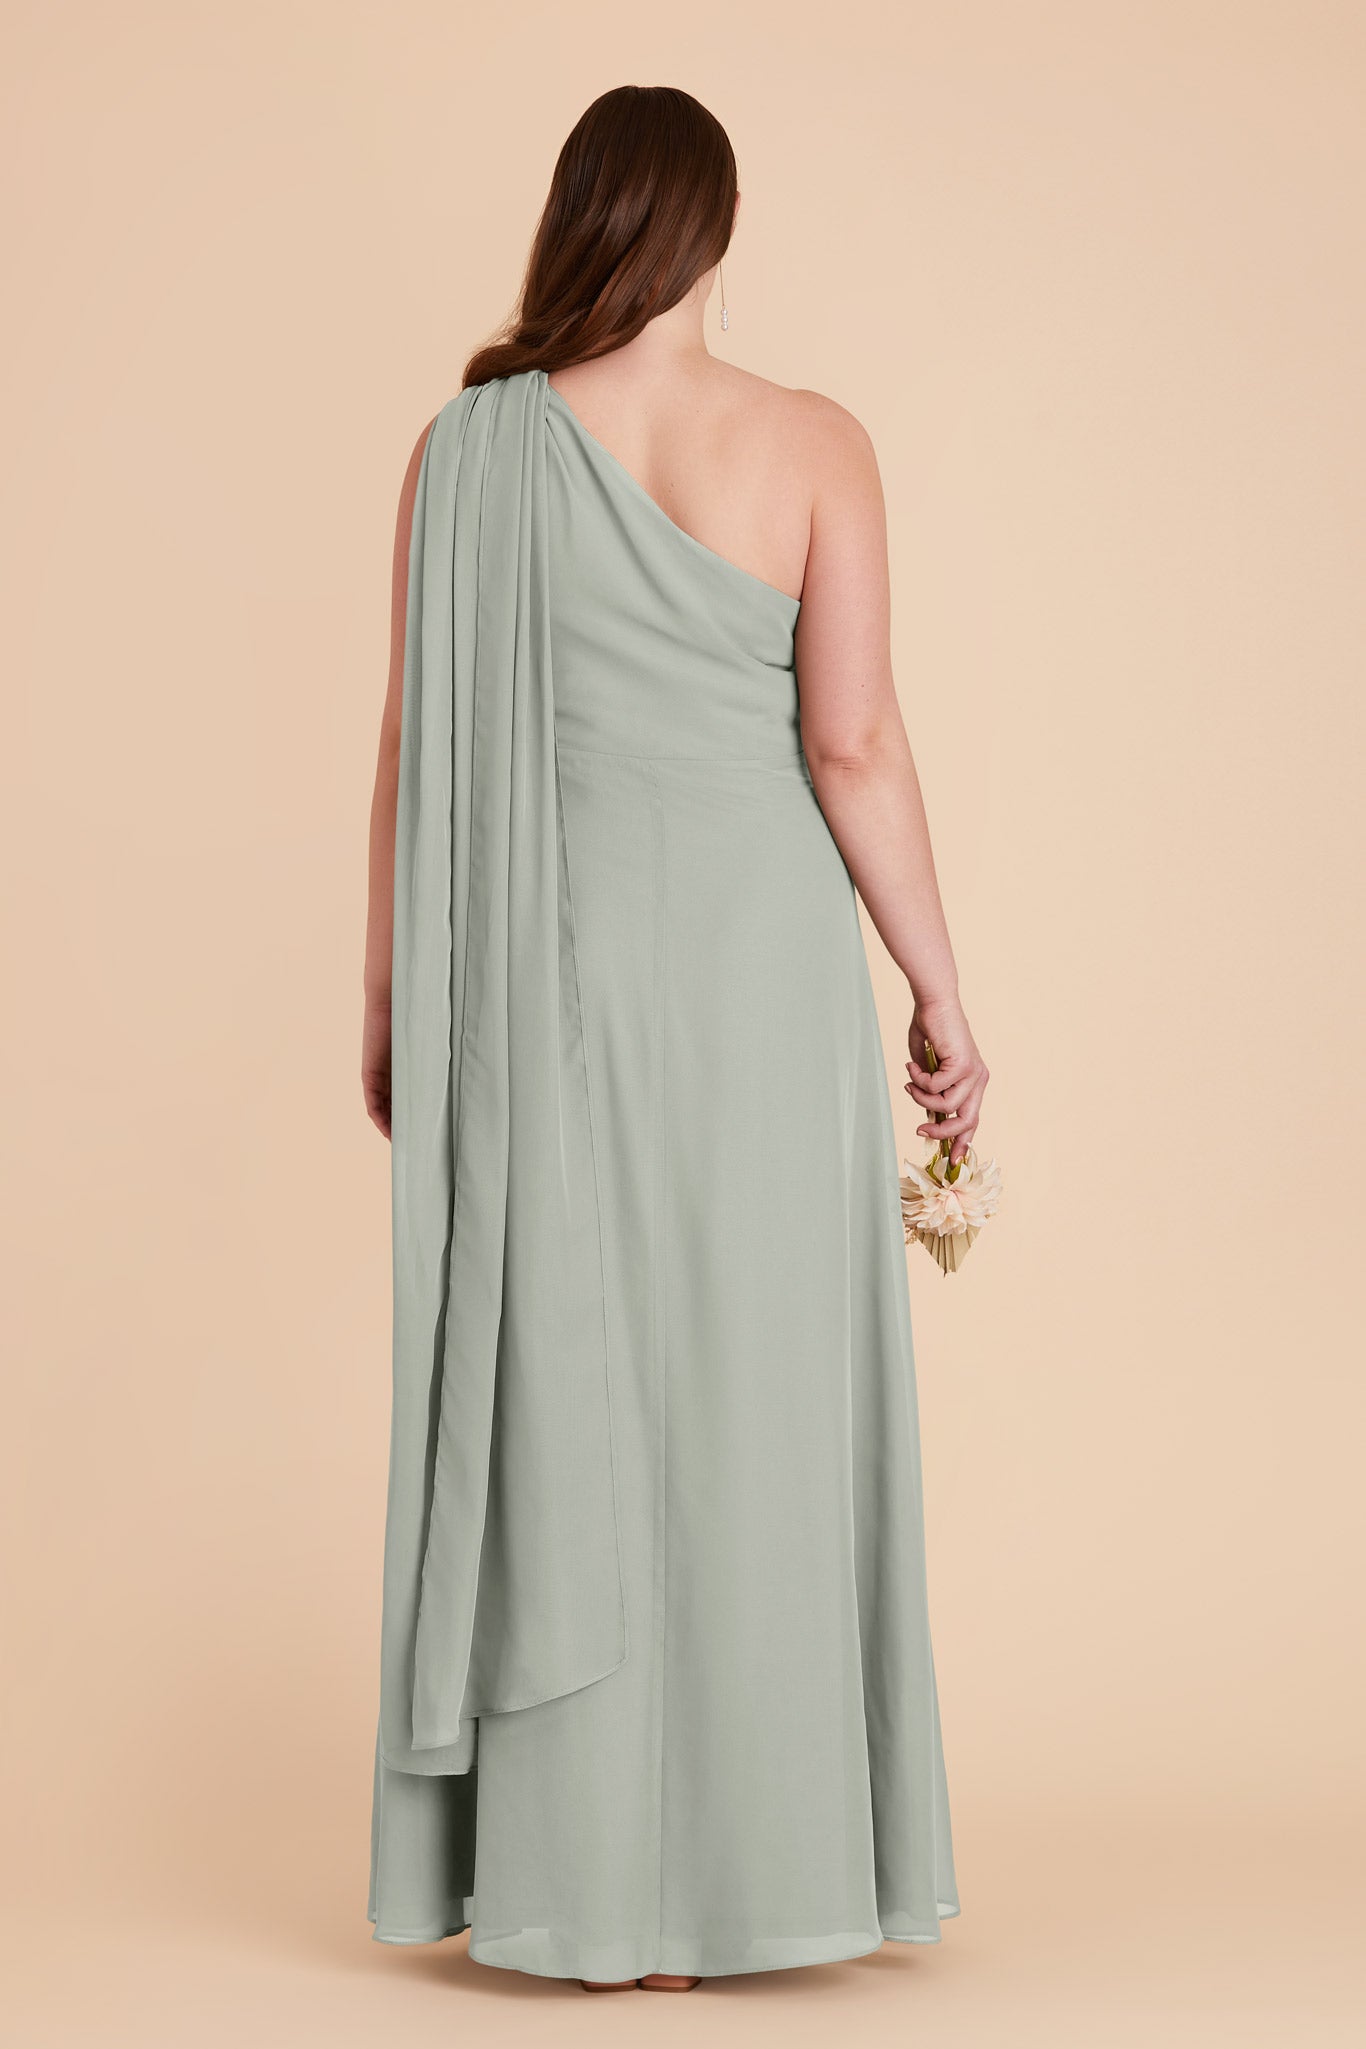 Sage Melissa Chiffon Dress by Birdy Grey